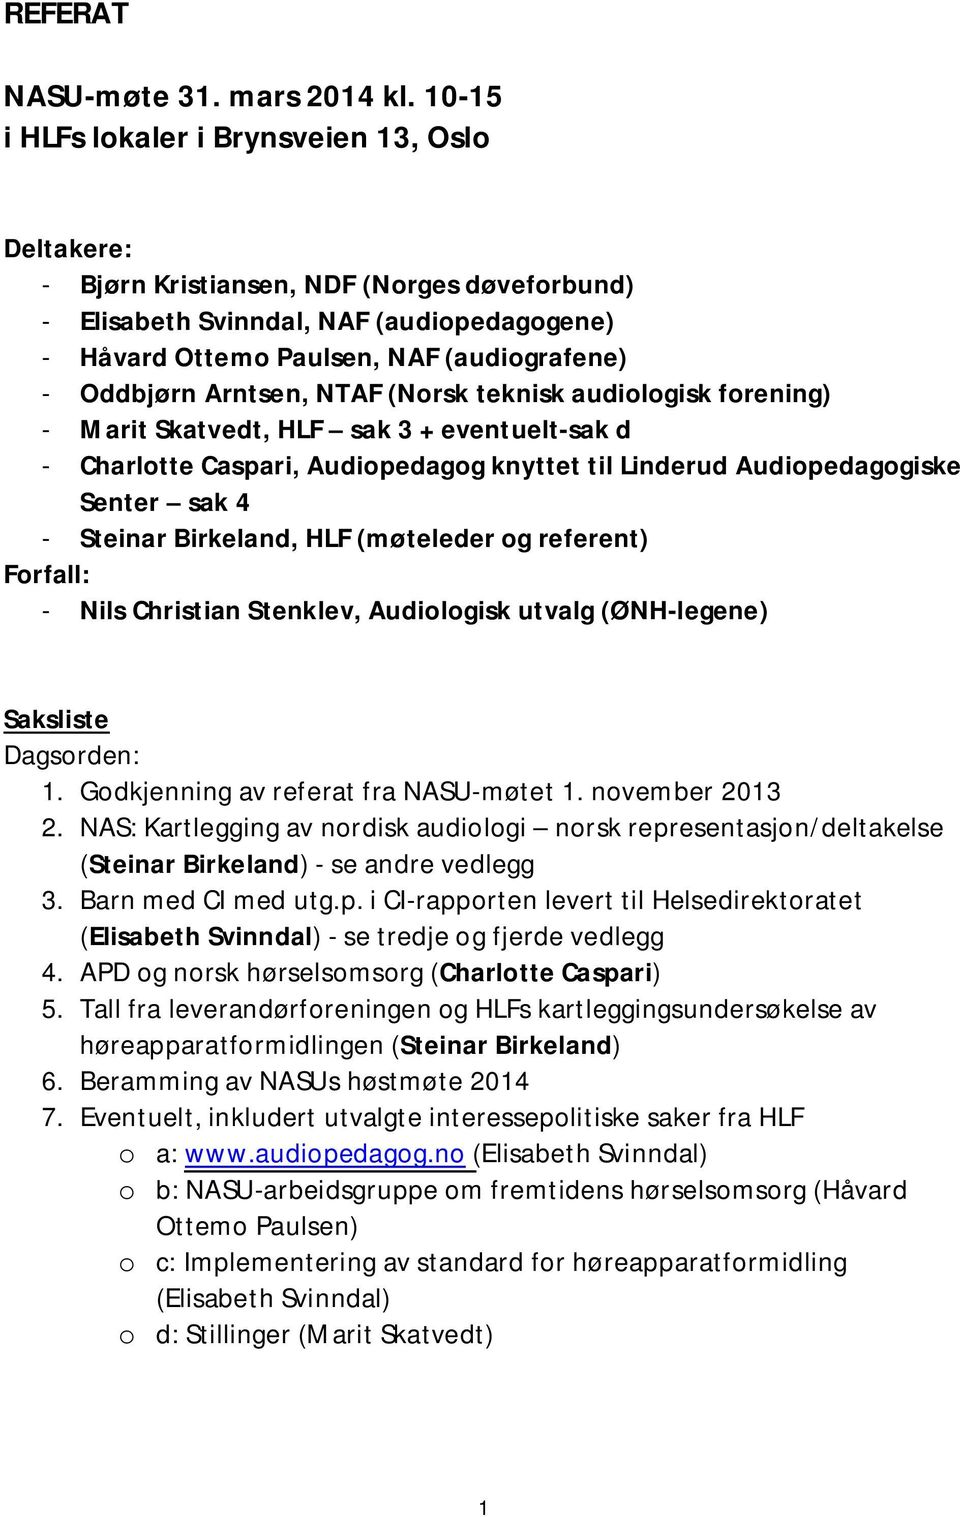 Arntsen, NTAF (Norsk teknisk audiologisk forening) - Marit Skatvedt, HLF sak 3 + eventuelt-sak d - Charlotte Caspari, Audiopedagog knyttet til Linderud Audiopedagogiske Senter sak 4 - Steinar